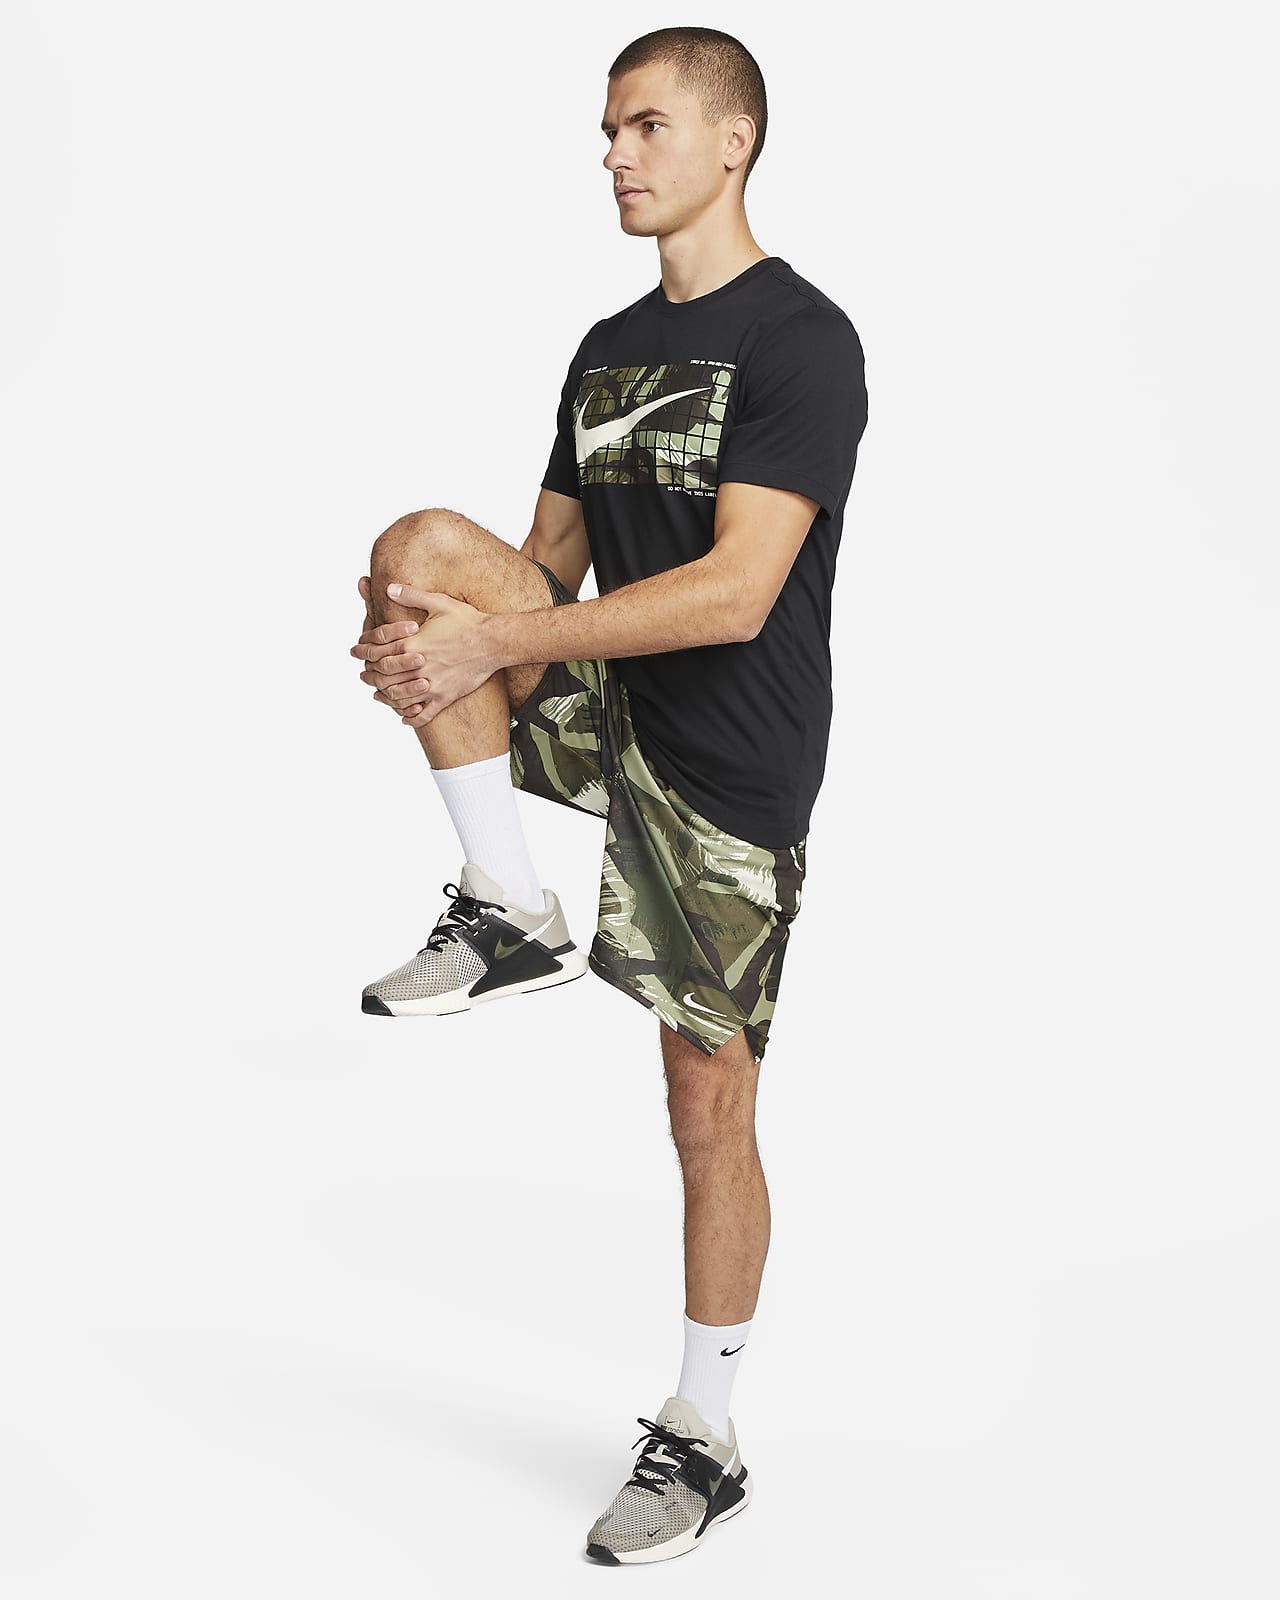 Nike, Shirts, Nike Drifit Basketball Jersey Size Medium Color Black Camo  Nwt